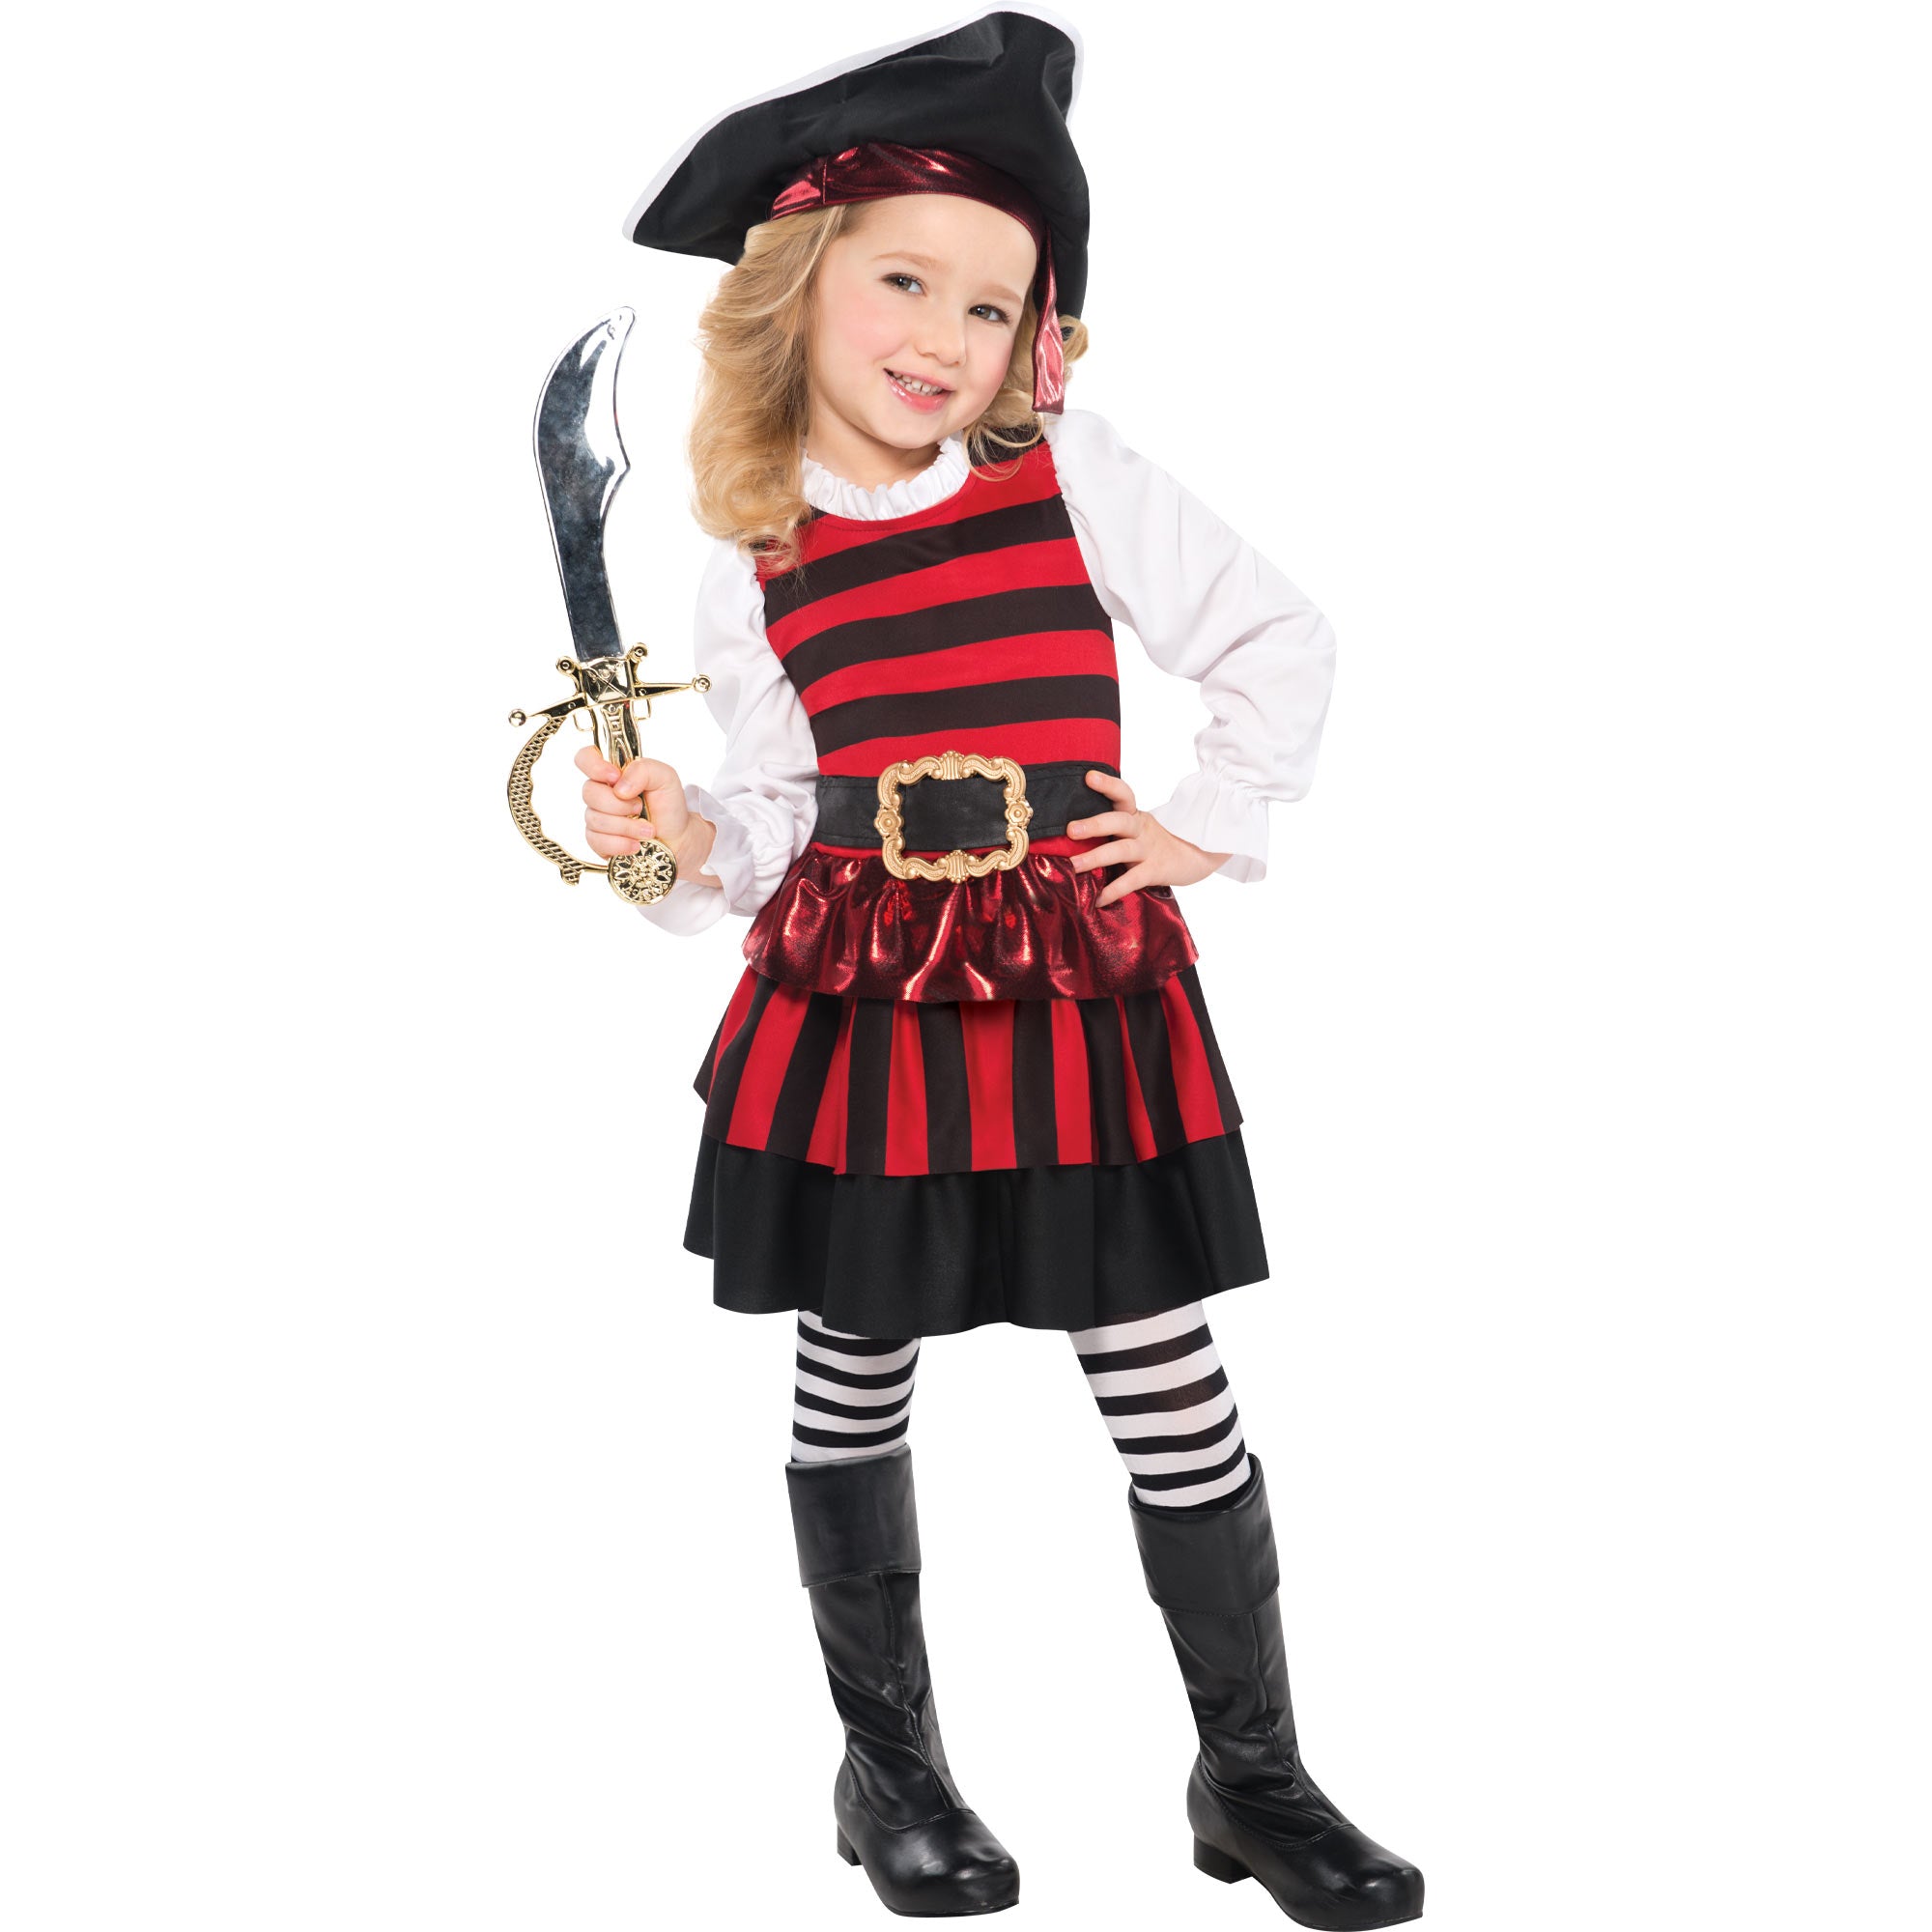 Costume Pirate Little Lass